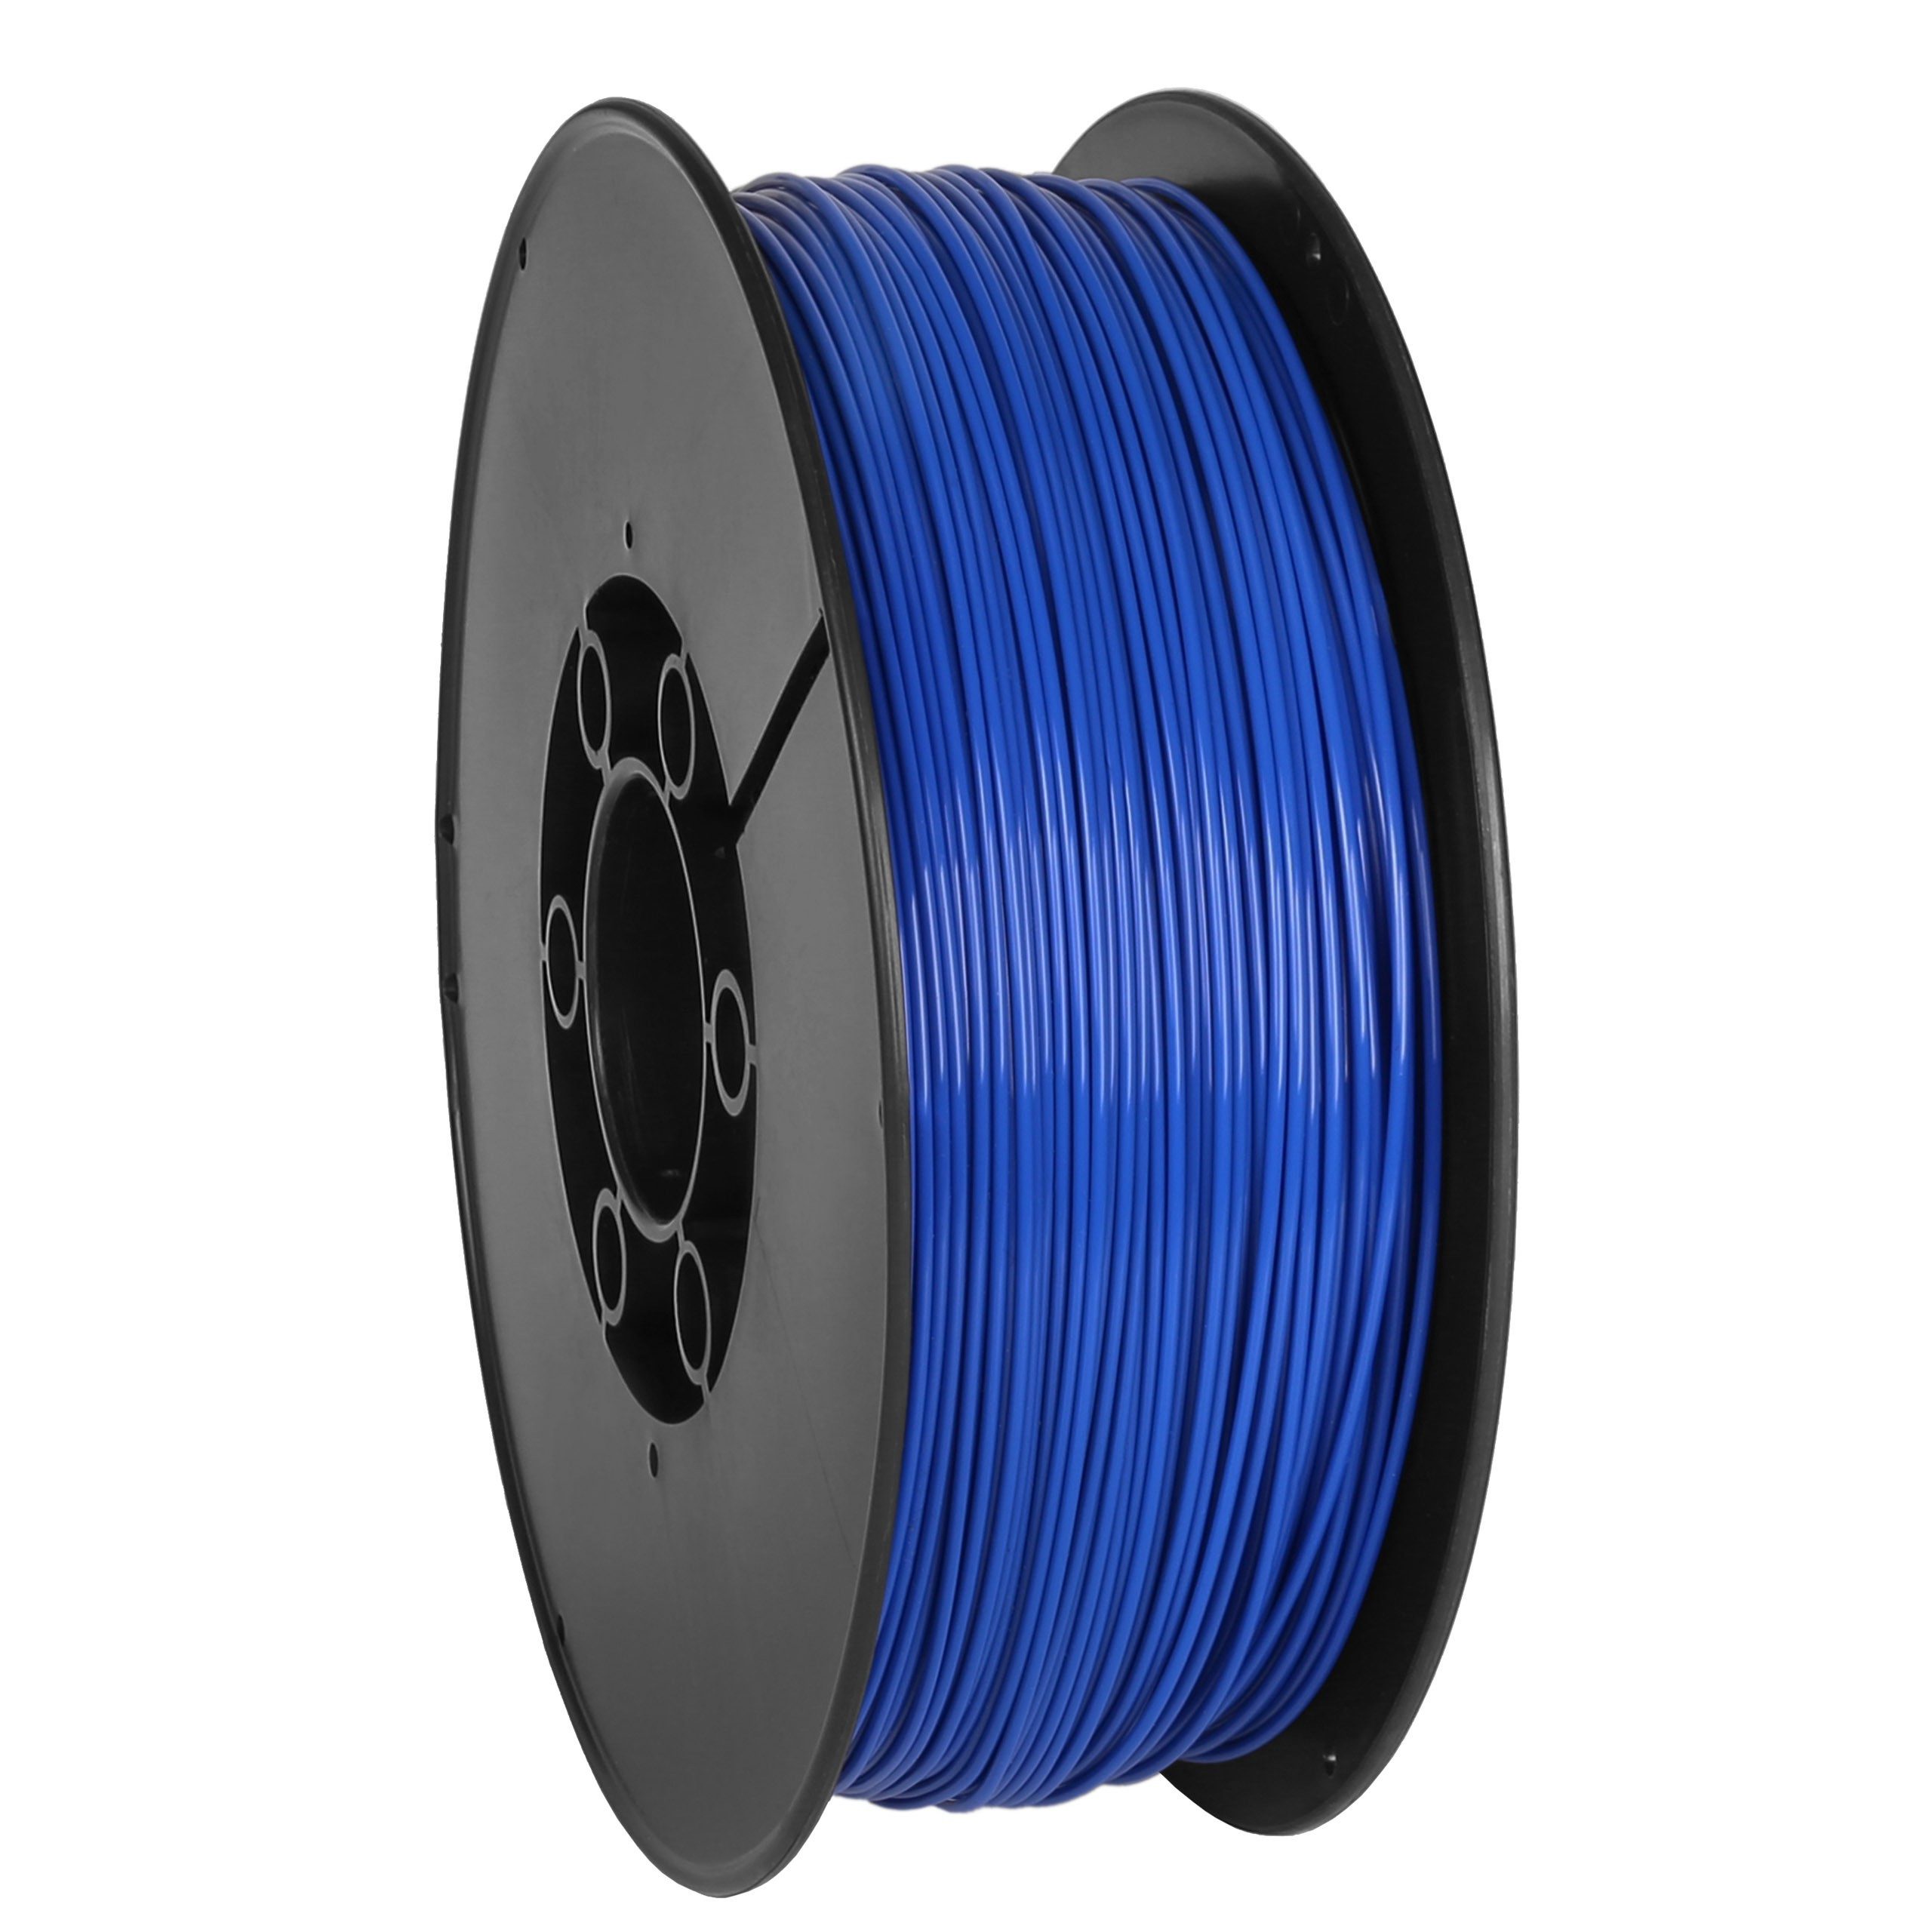 Sarcia.eu Filament Dunkelblaues Filament PLA 1.75 mm (Draht) für 3D-Drucker 1 kg